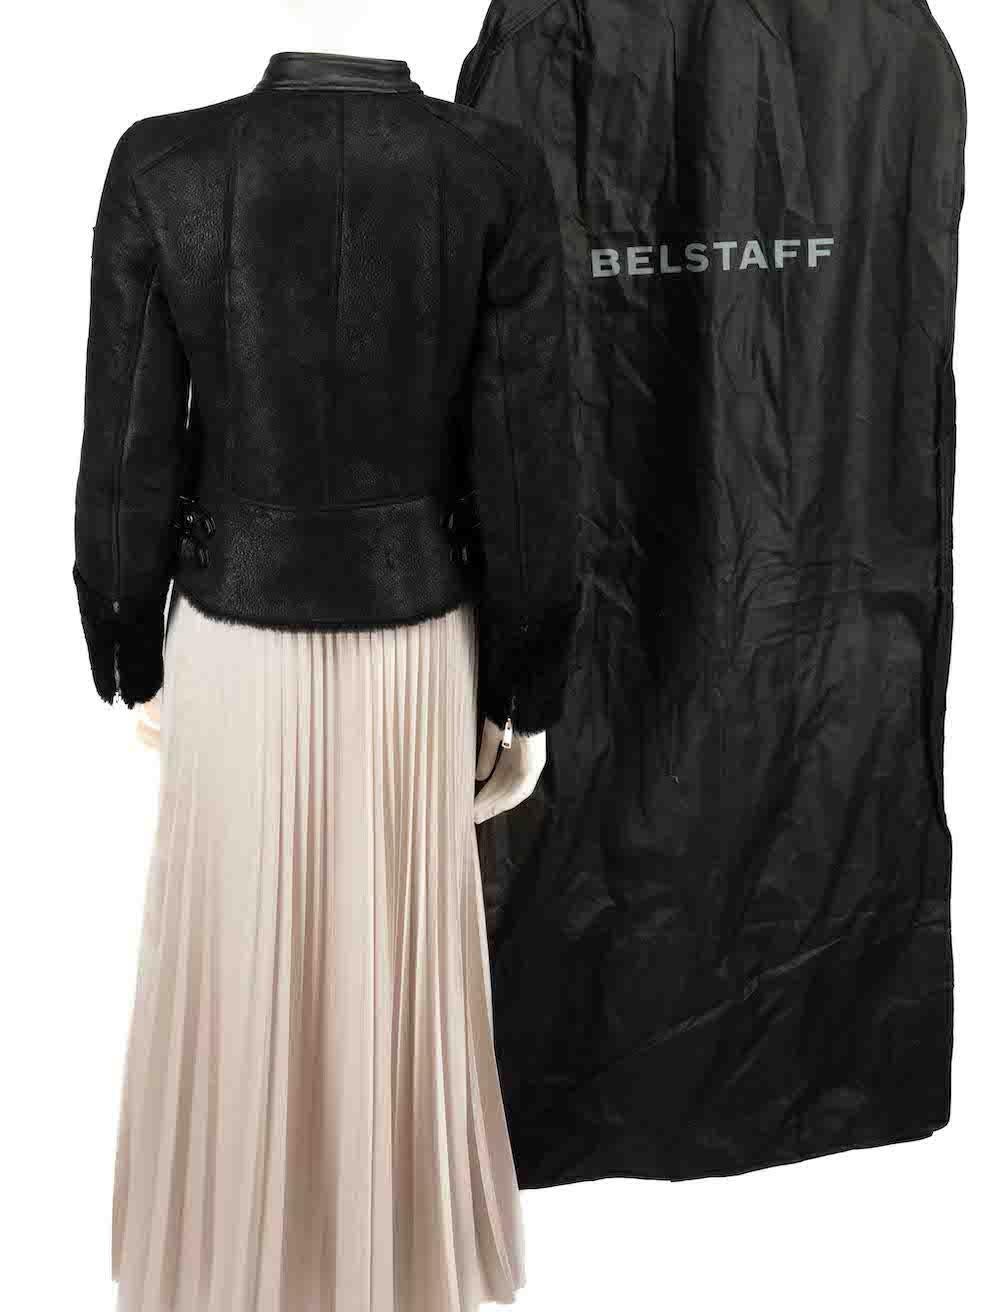 Belstaff Black Shearling Suede Biker Jacket Size M In Good Condition For Sale In London, GB